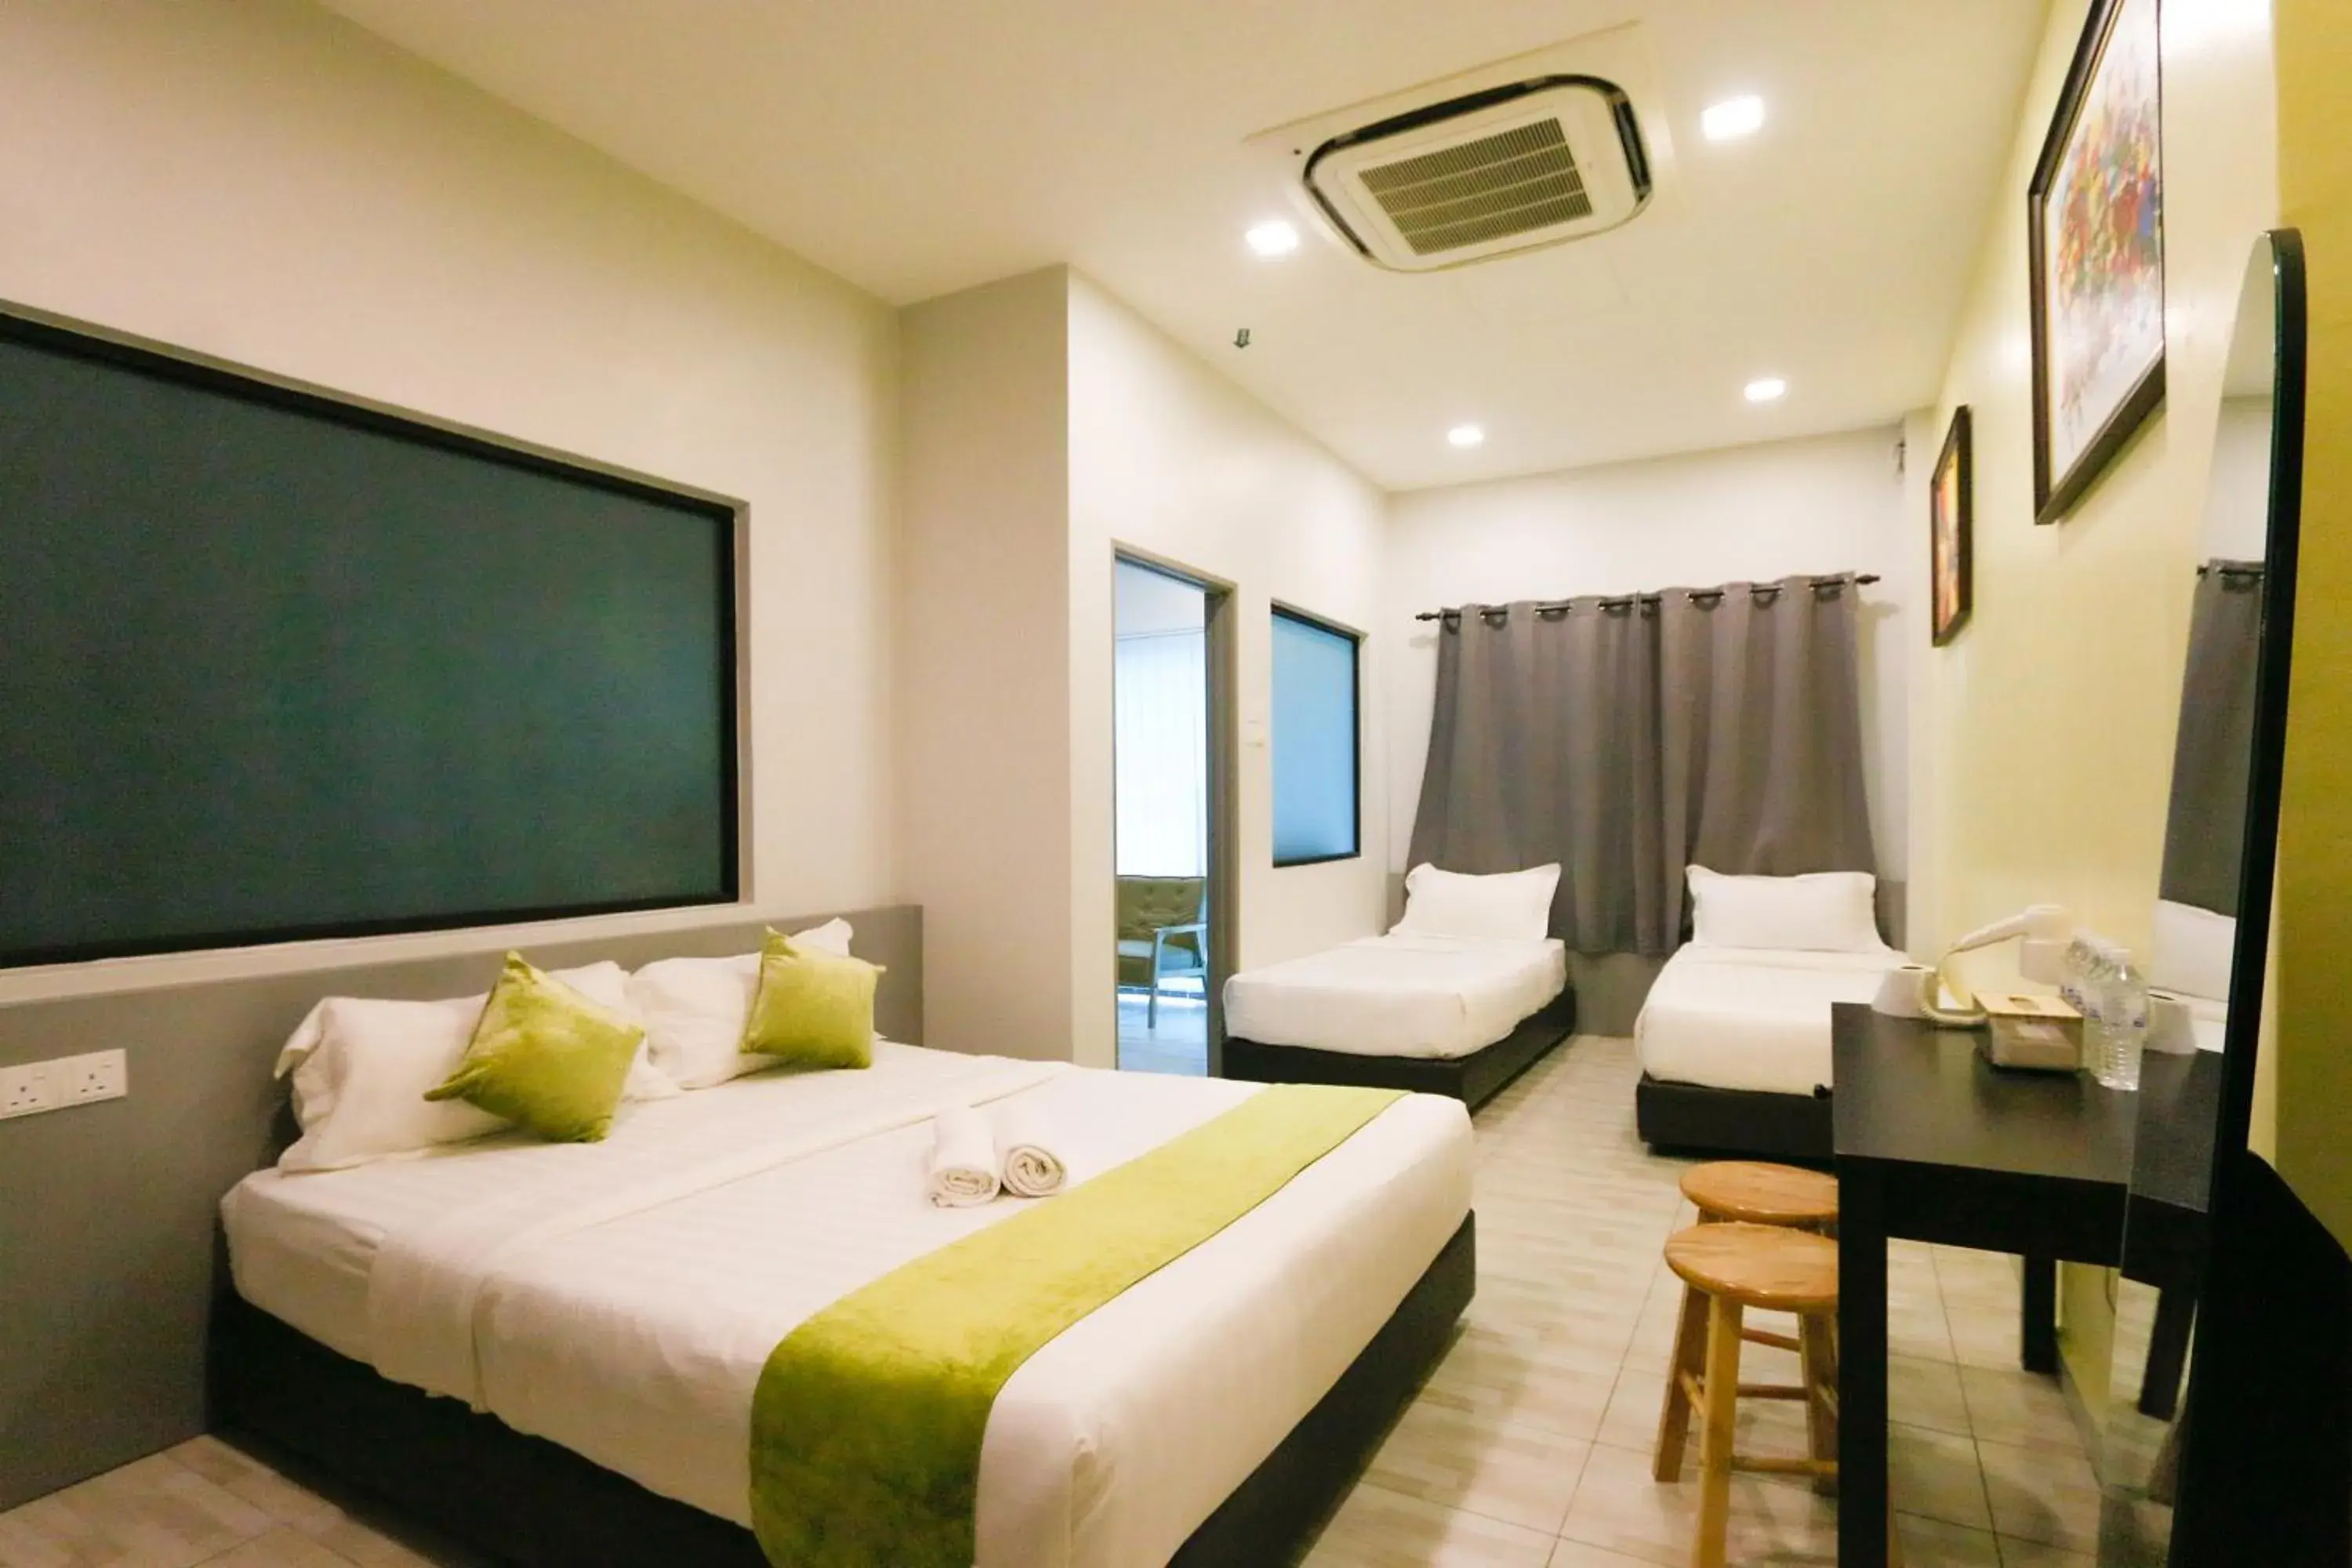 Bedroom in Travelland Hotel